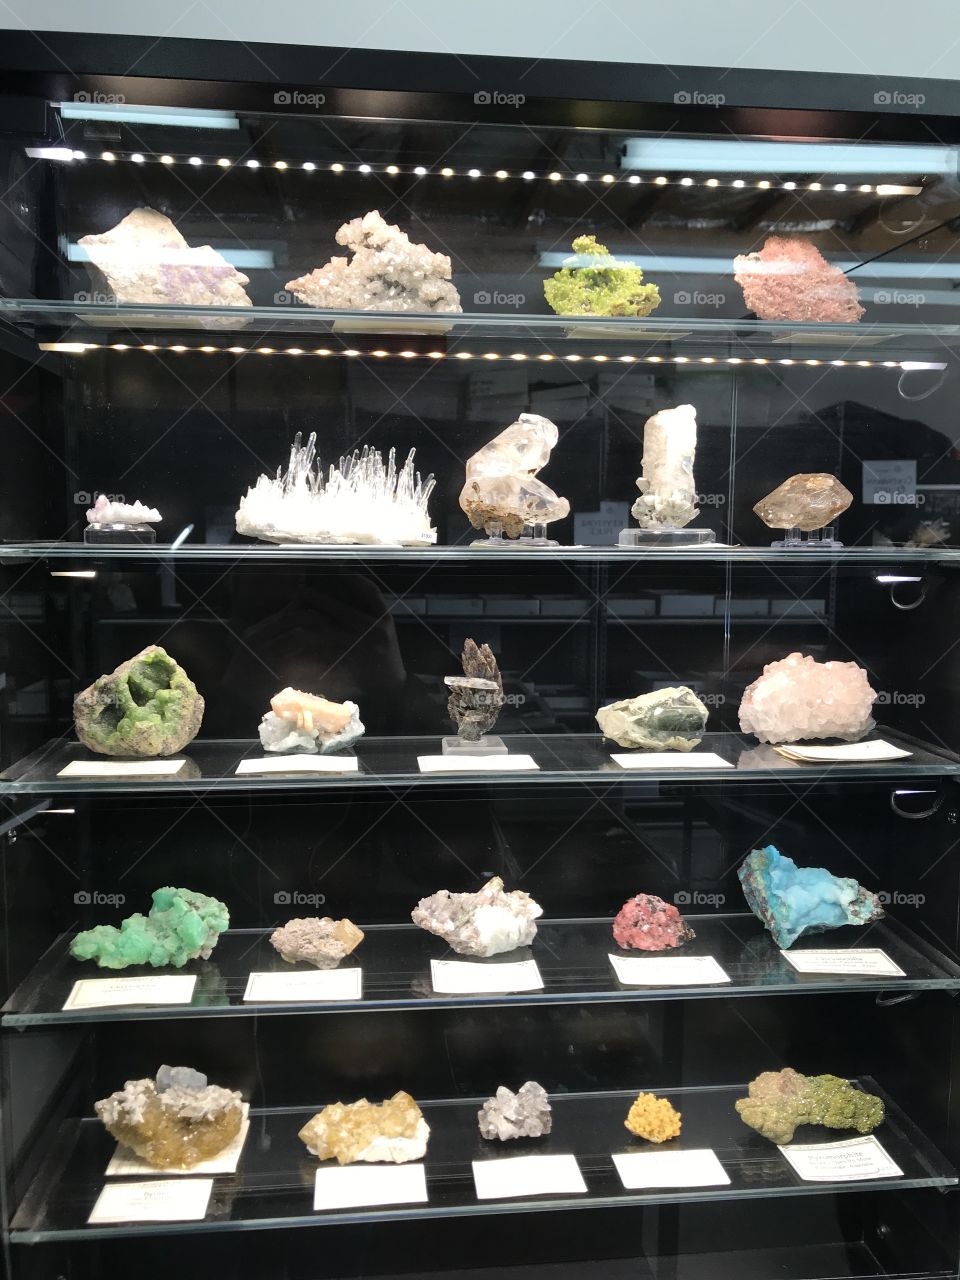 Tucson Arizona gem and mineral show